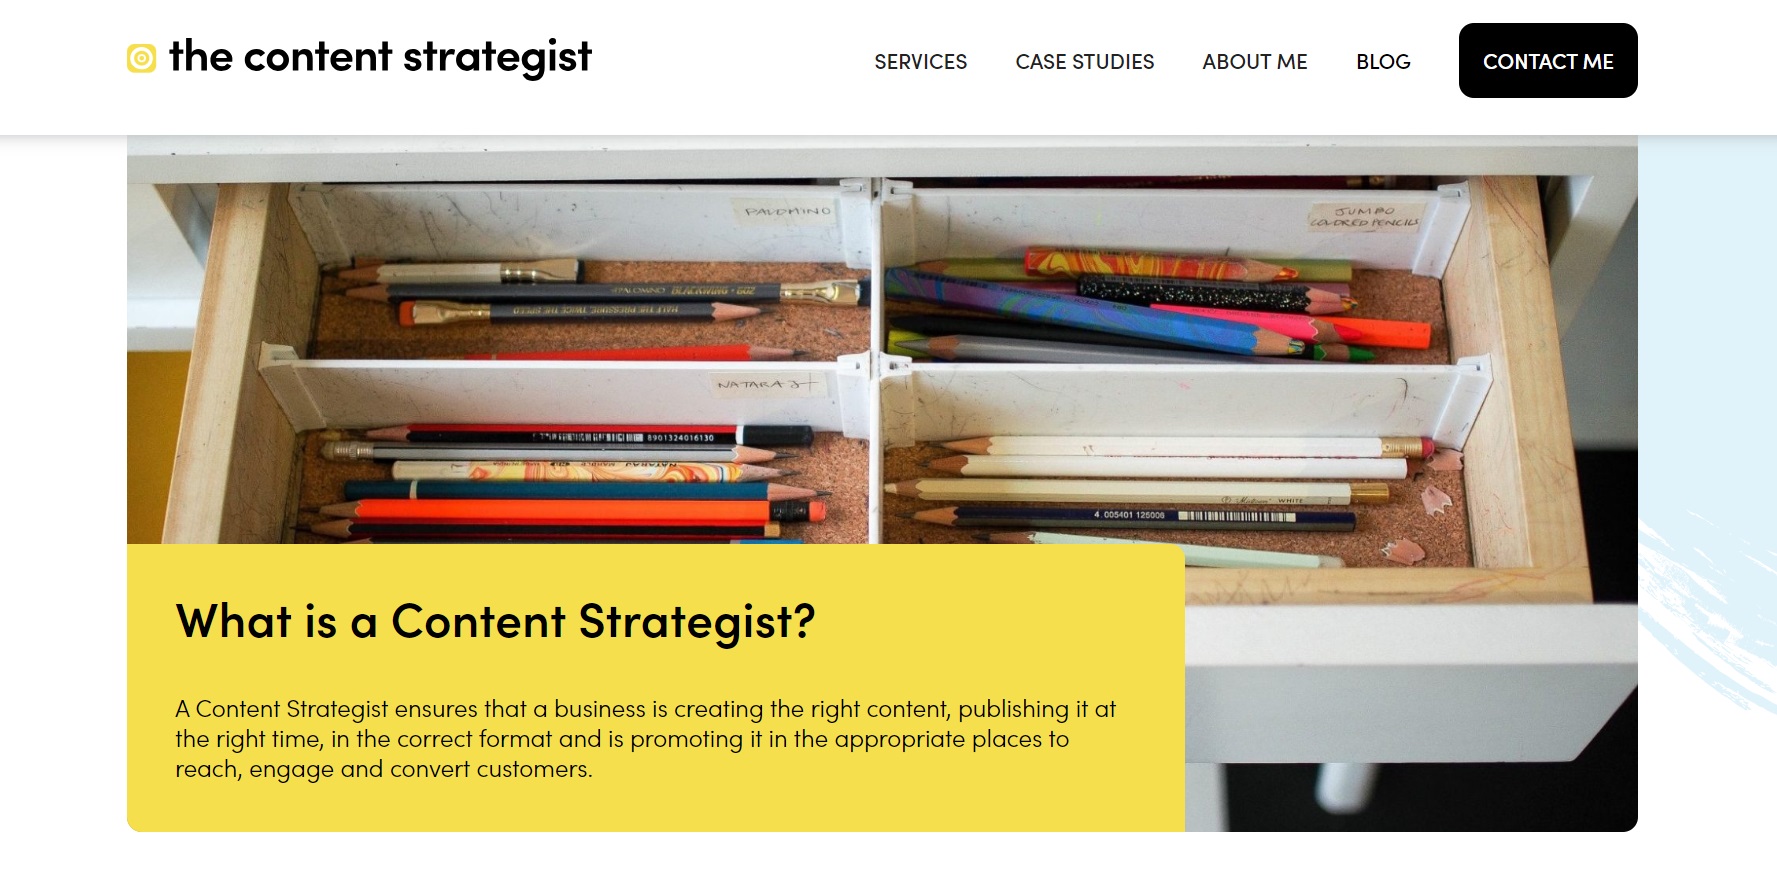 the content strategist blog o marketingu